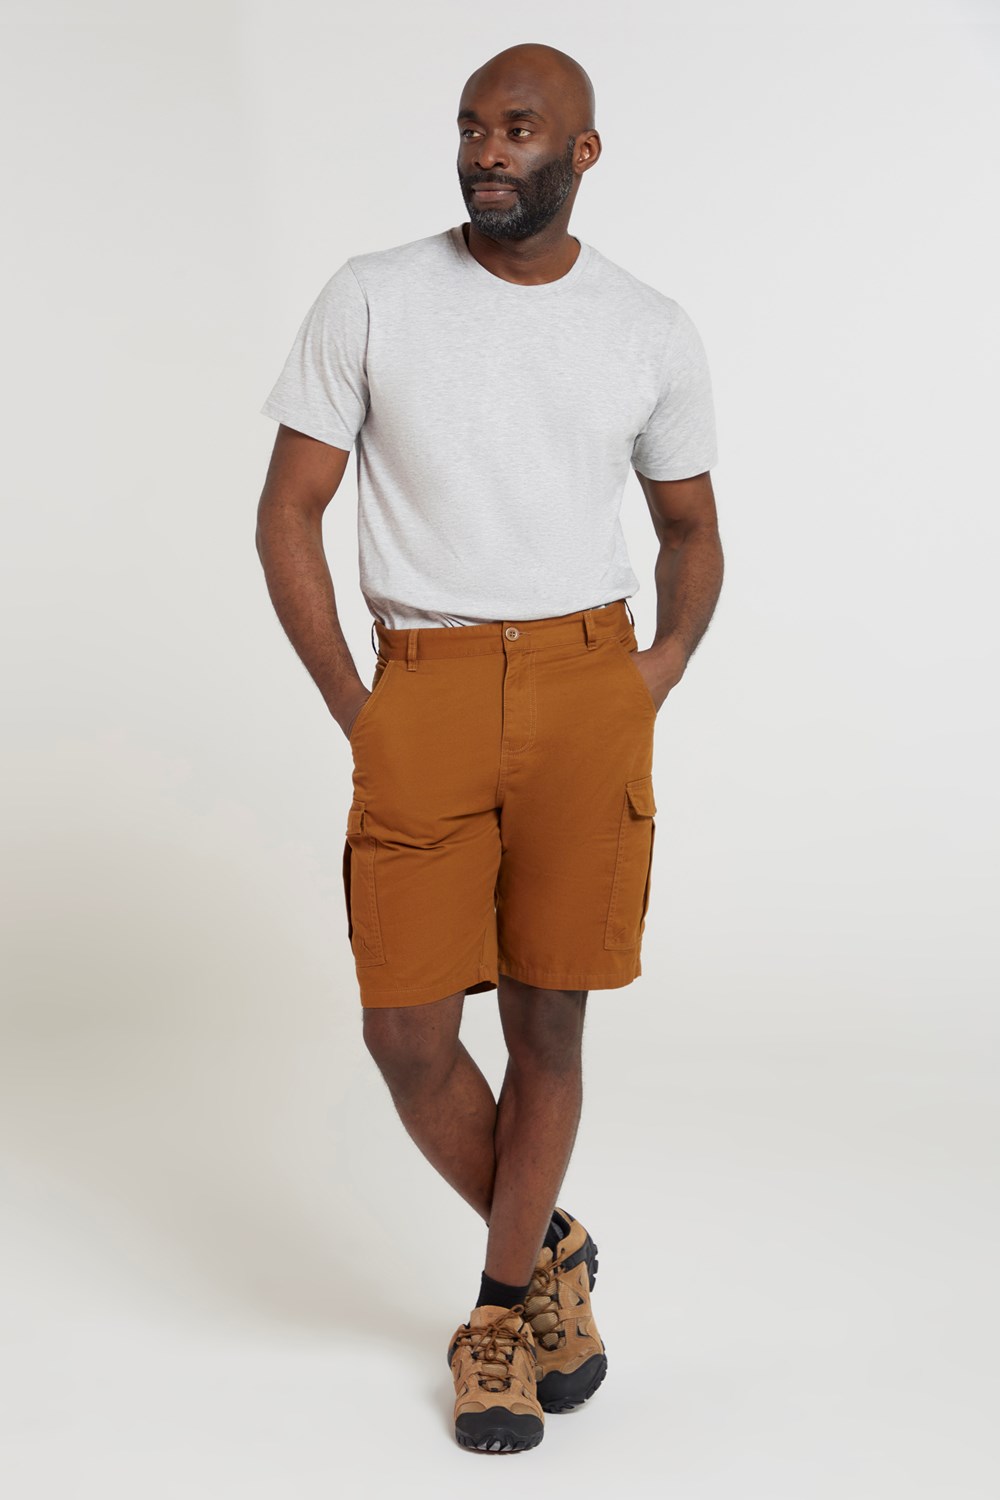 Buy Mountain Warehouse Khaki Green Mens Camo 100% Cotton Lightweight Cargo  Shorts from the Next UK online shop